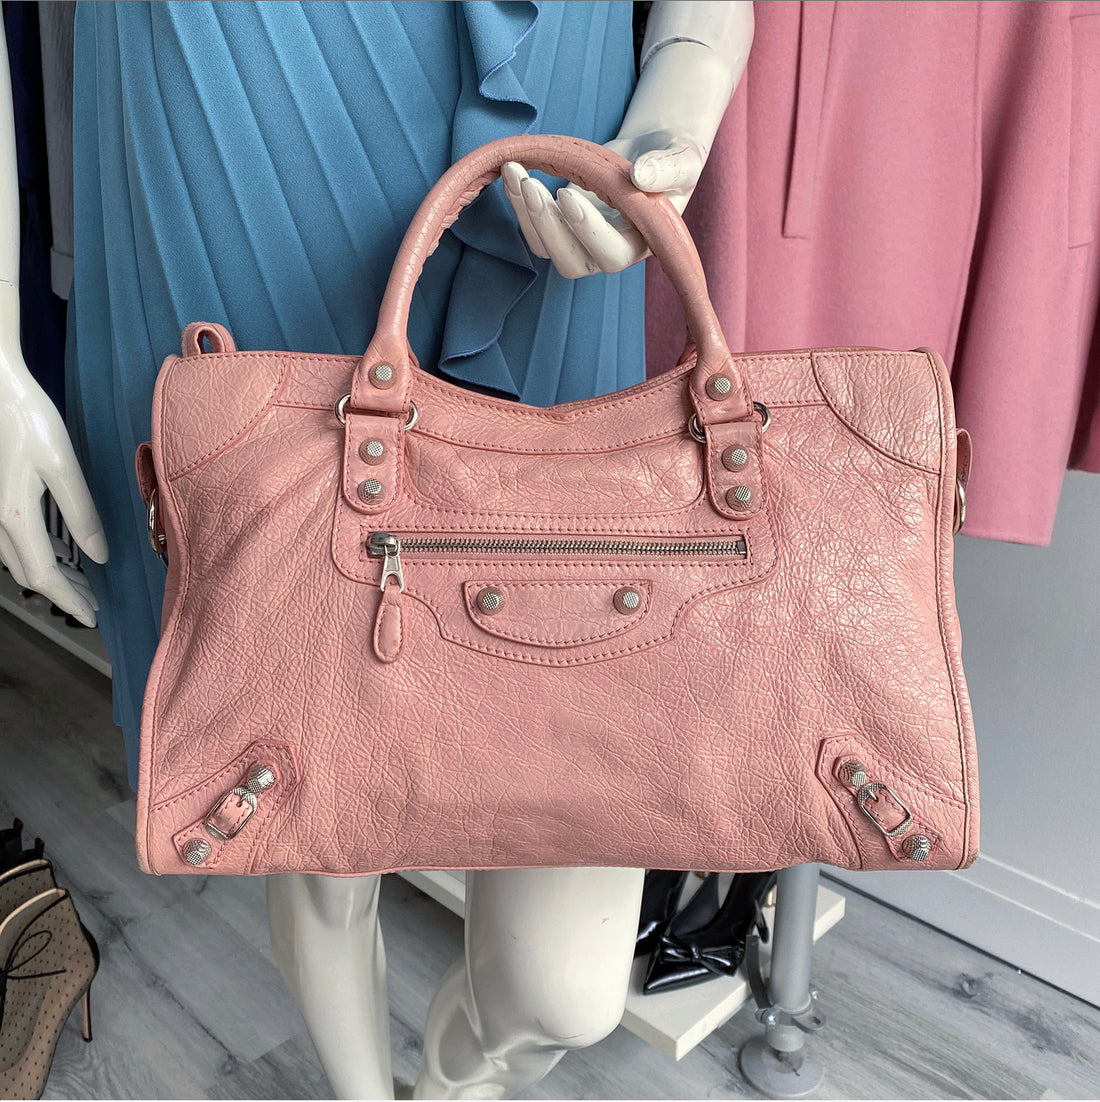 Balenciaga Light Pink Leather Medium Bag – I MISS YOU VINTAGE